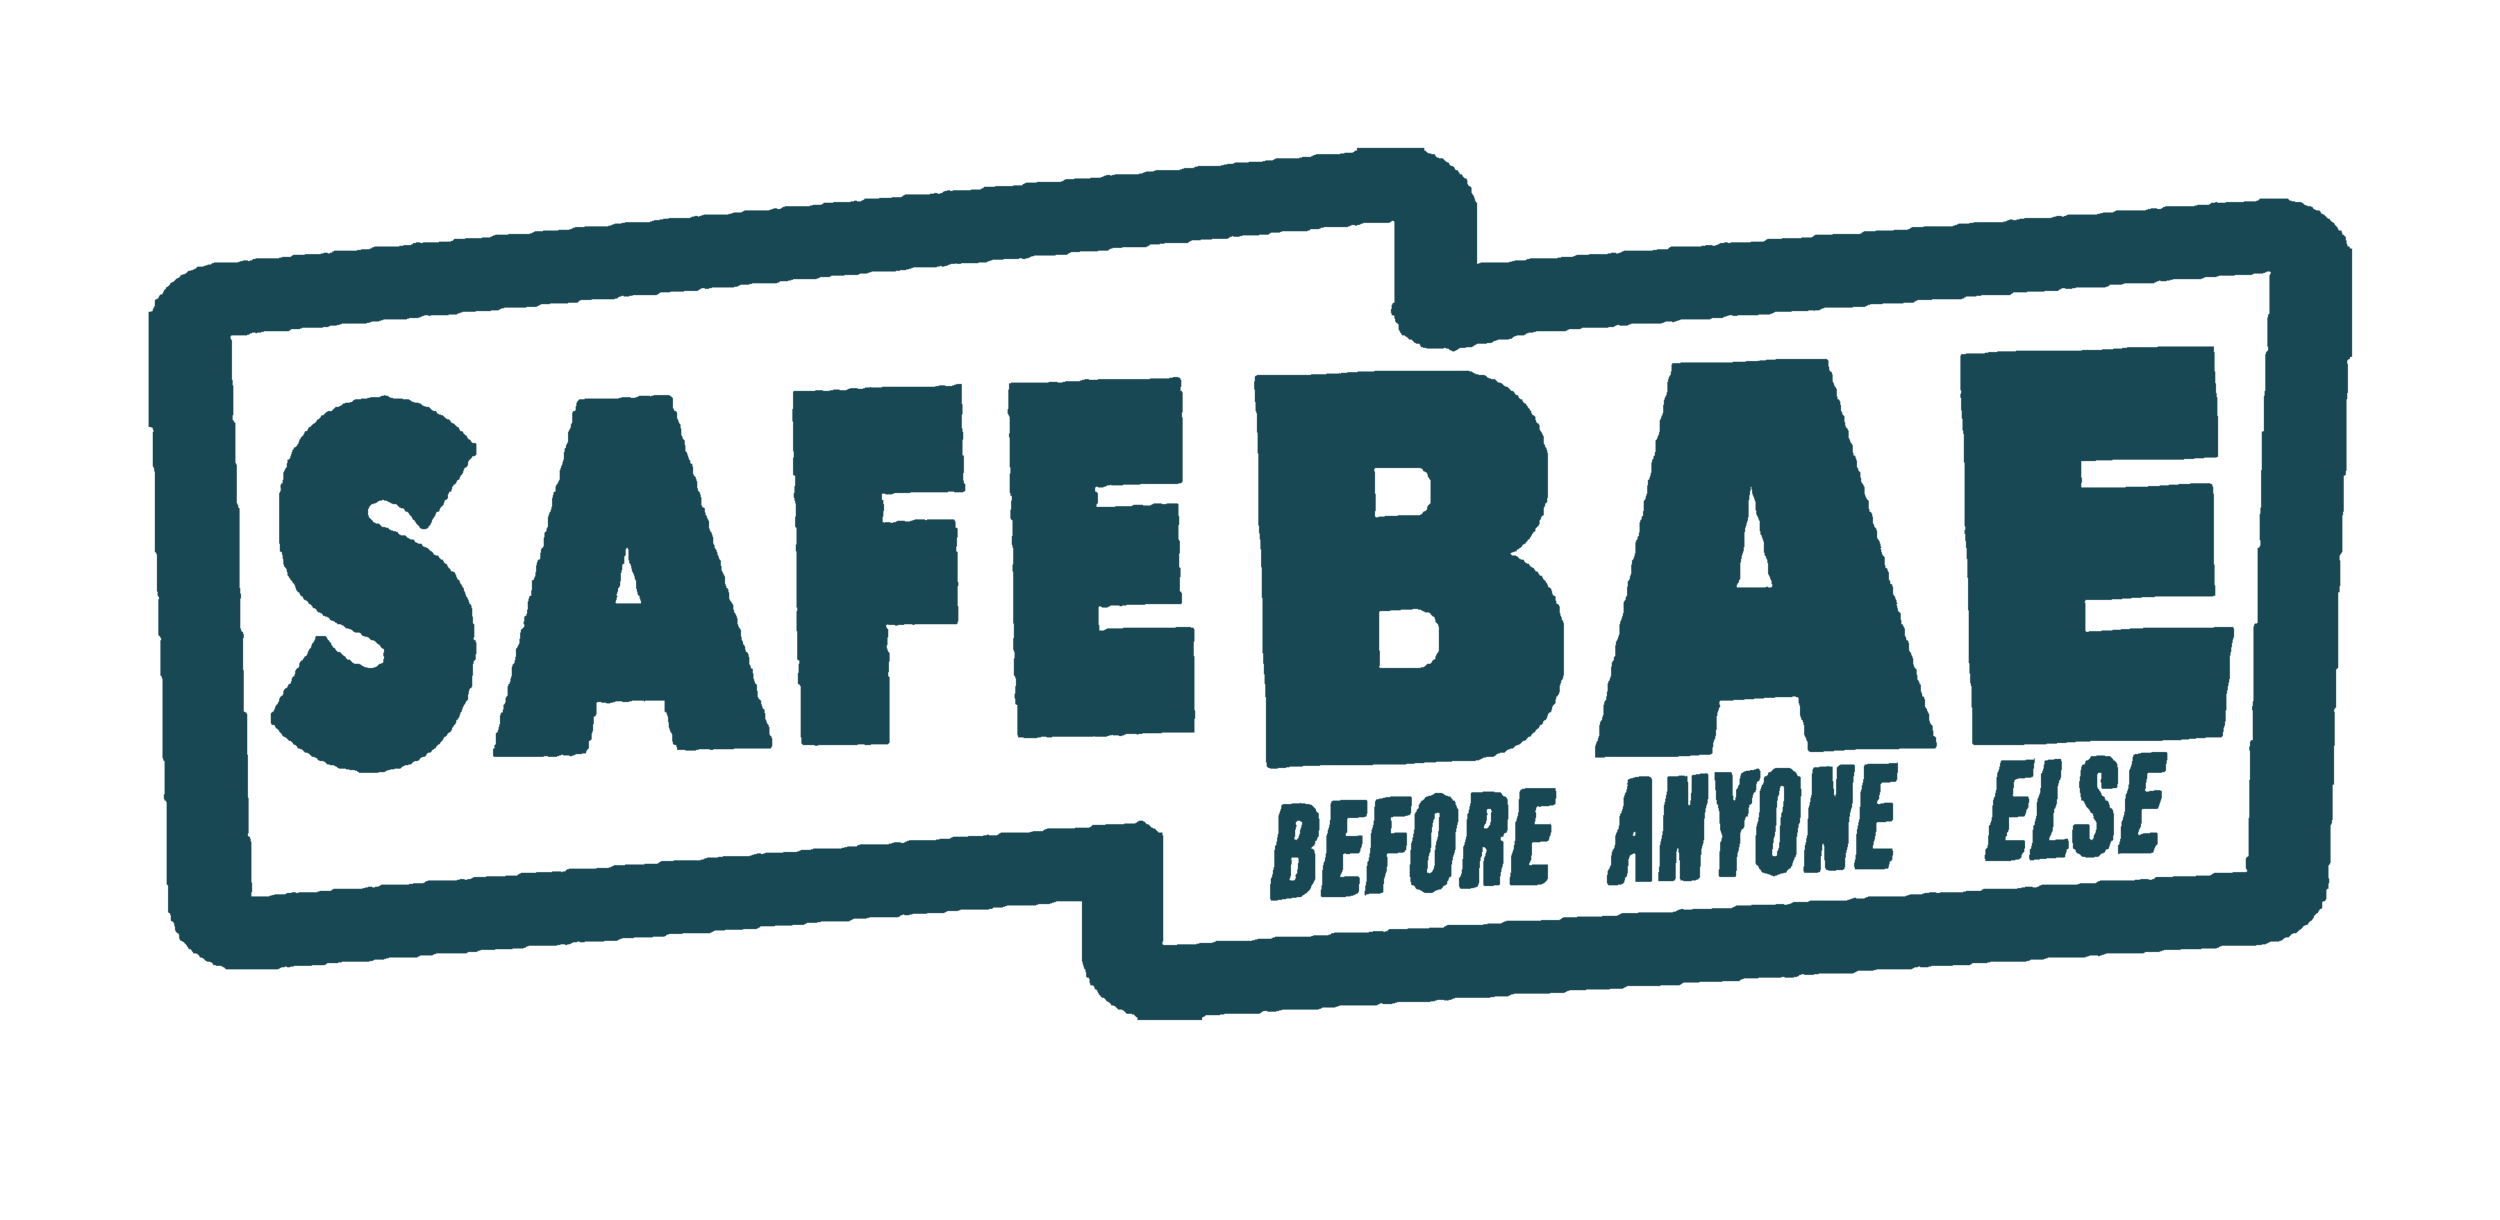 teal safebae logo